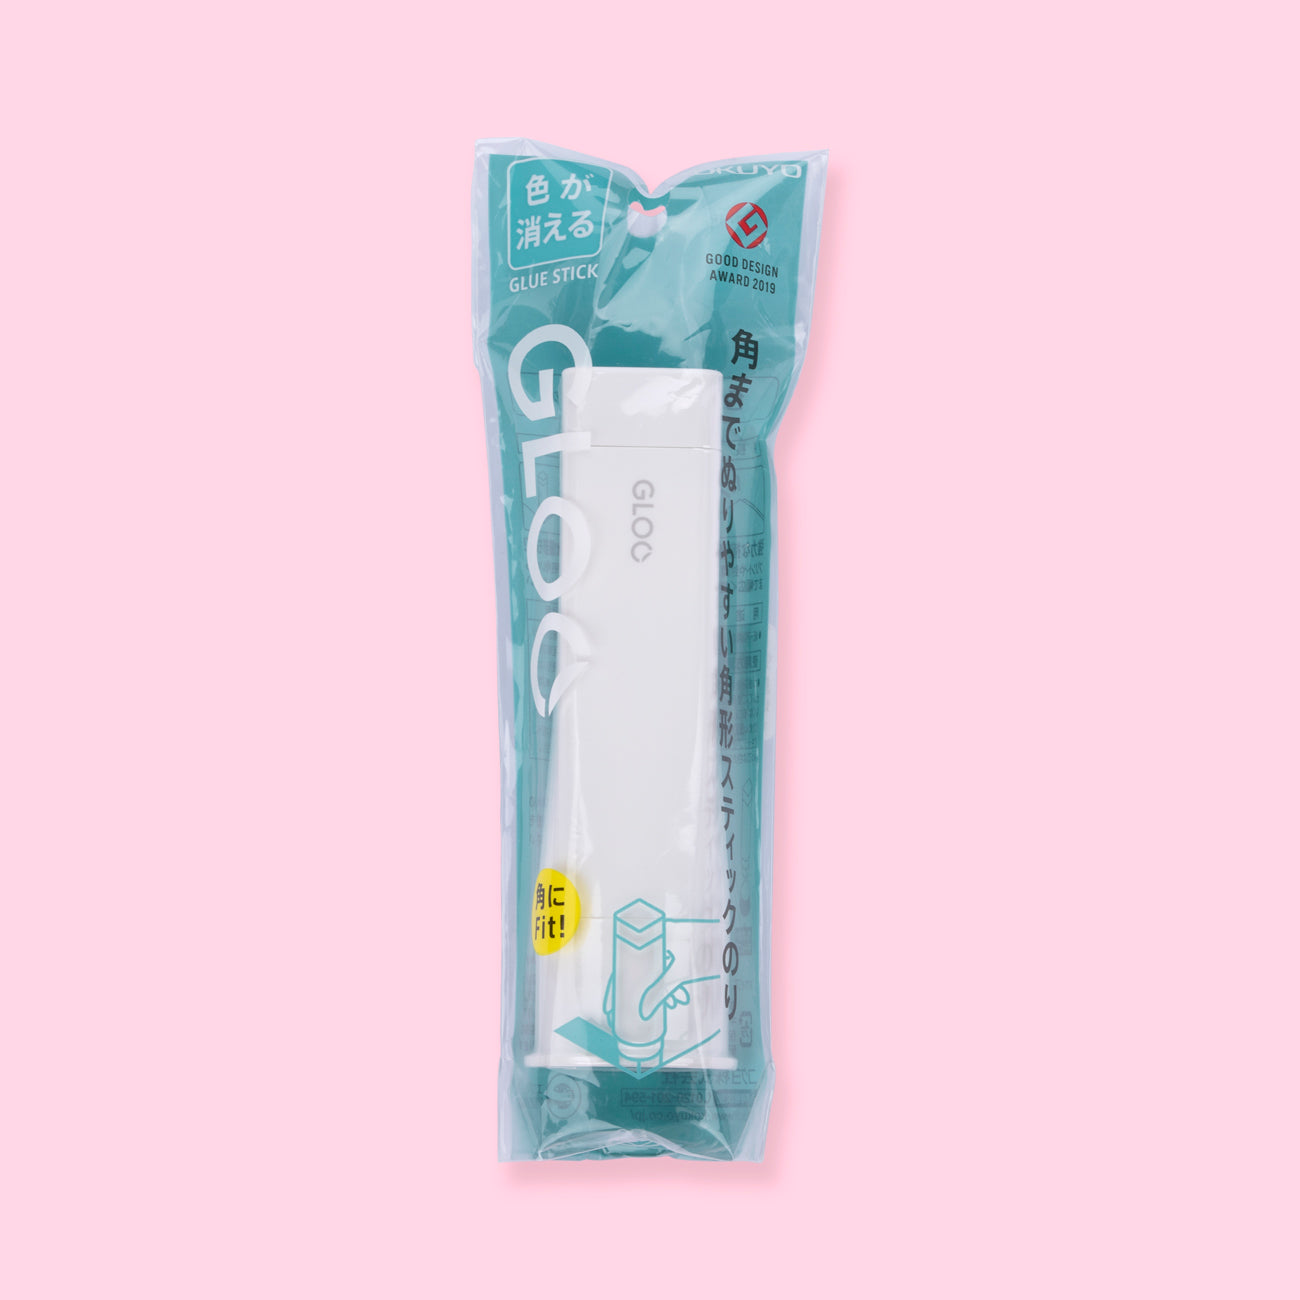 Kokuyo Gloo Glue Stick - Small - Blue